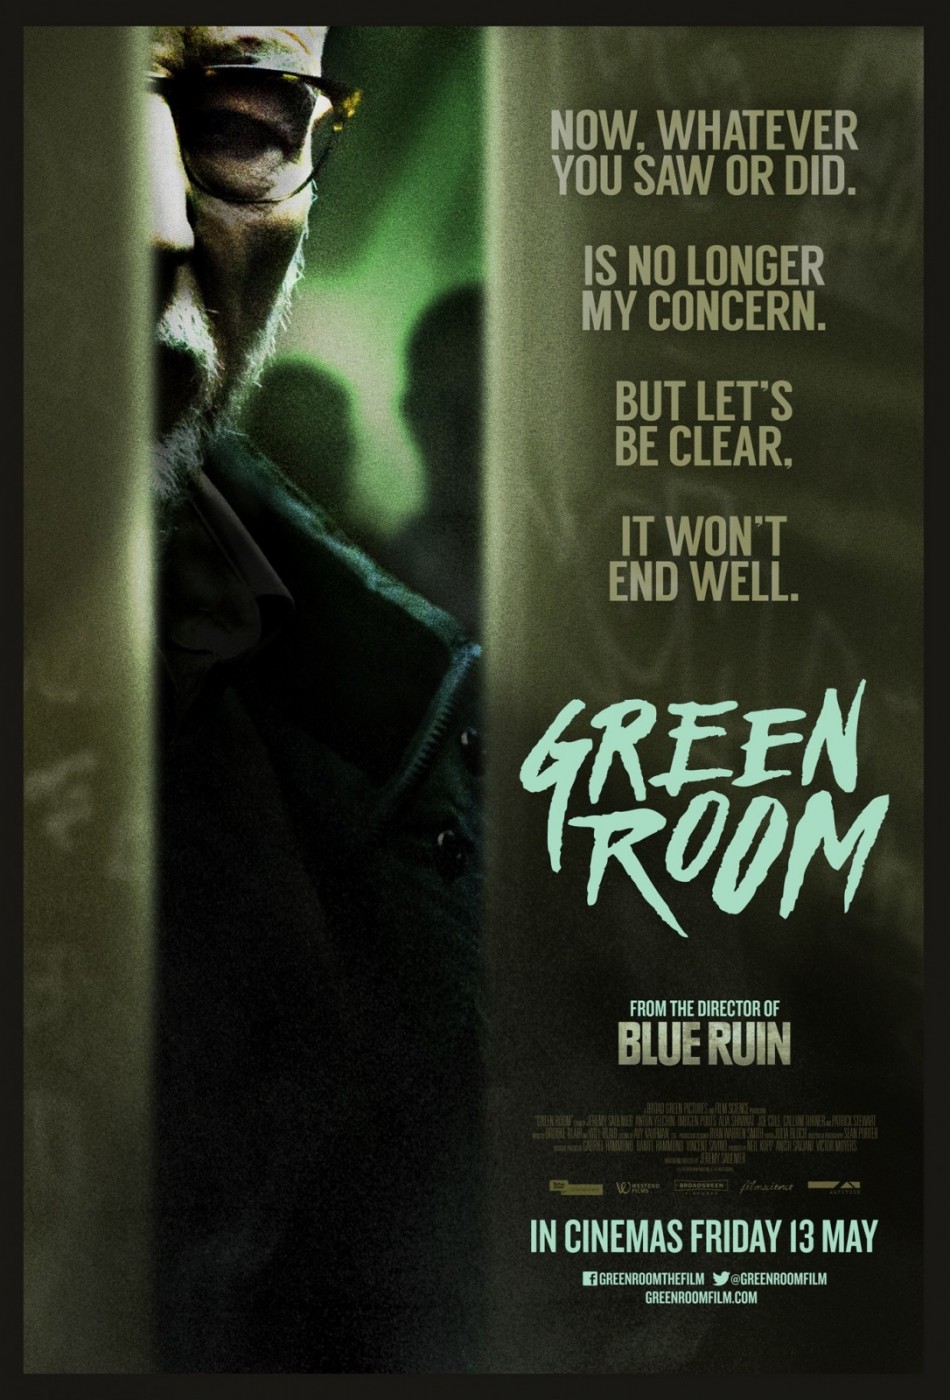 Green room, trailer